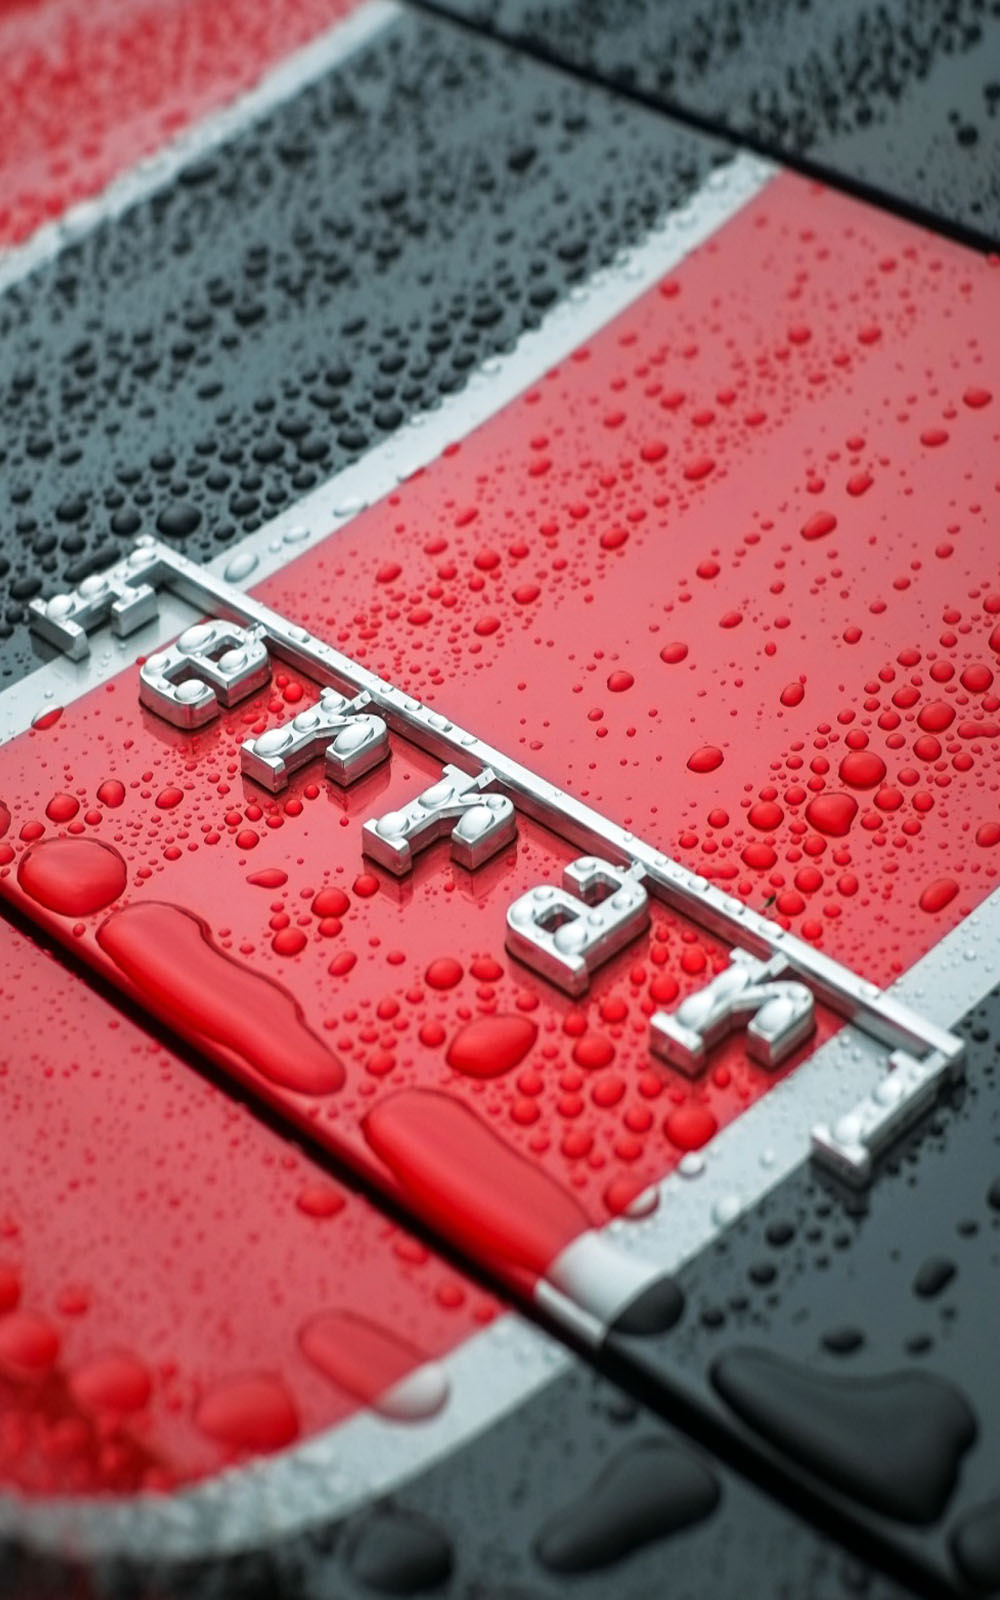 Ferrari logo 1080P, 2K, 4K, 5K HD wallpapers free download | Wallpaper Flare